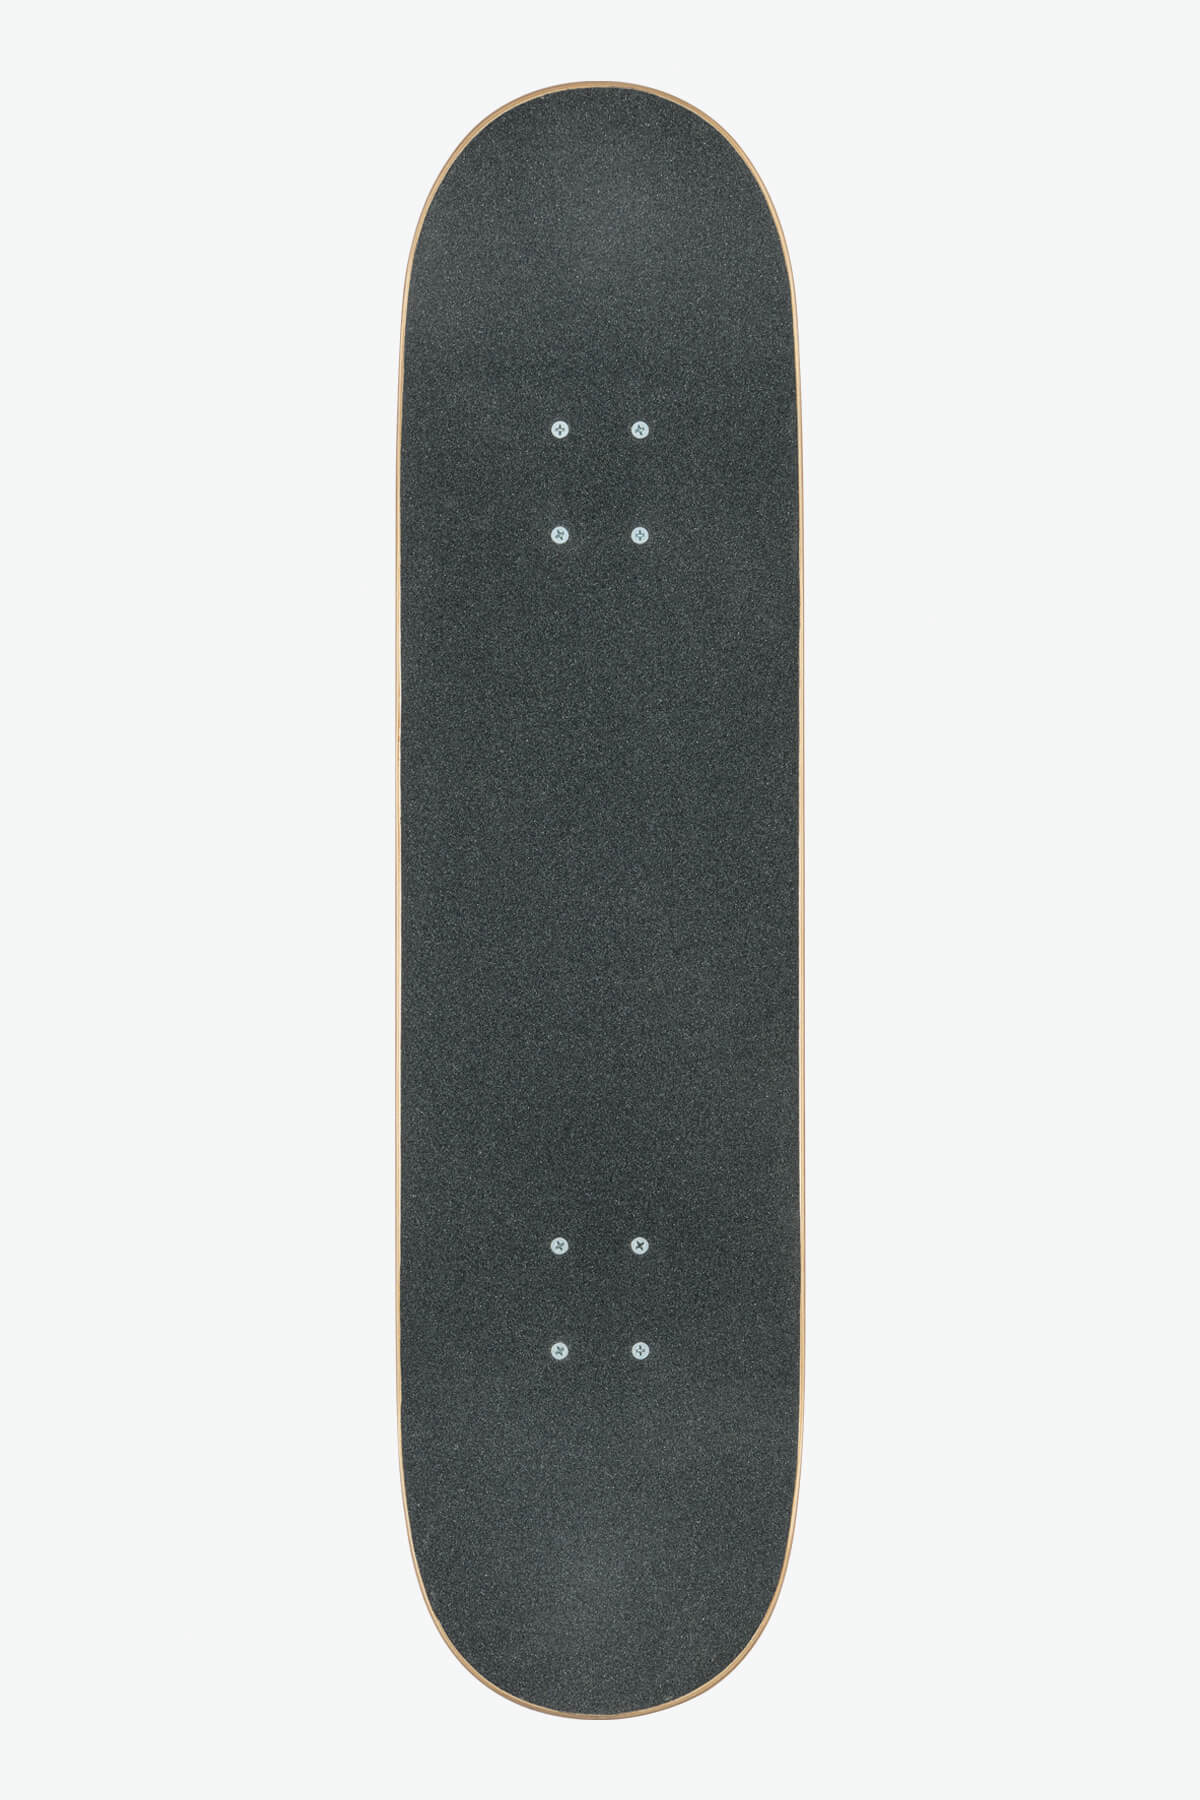 Globe - G0 Fubar - Haze/Off-White - 7,75" Compleet Skateboard